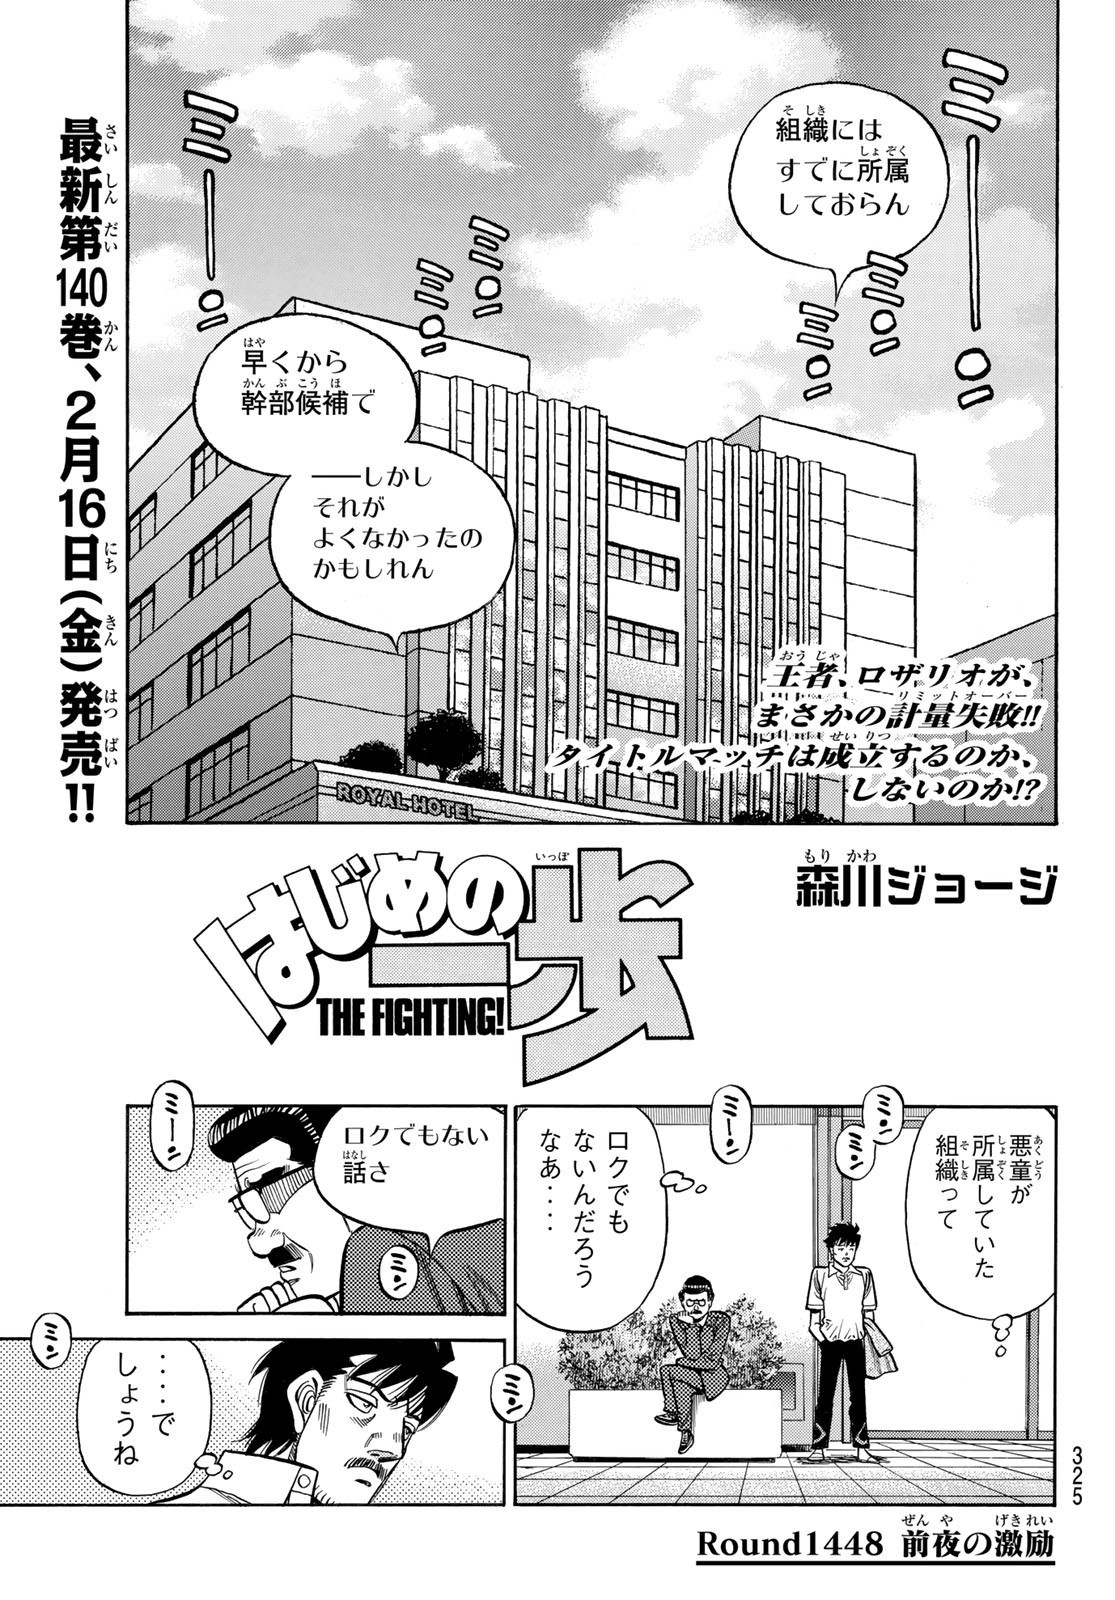 Hajime no Ippo - Chapter 1448 - Page 1